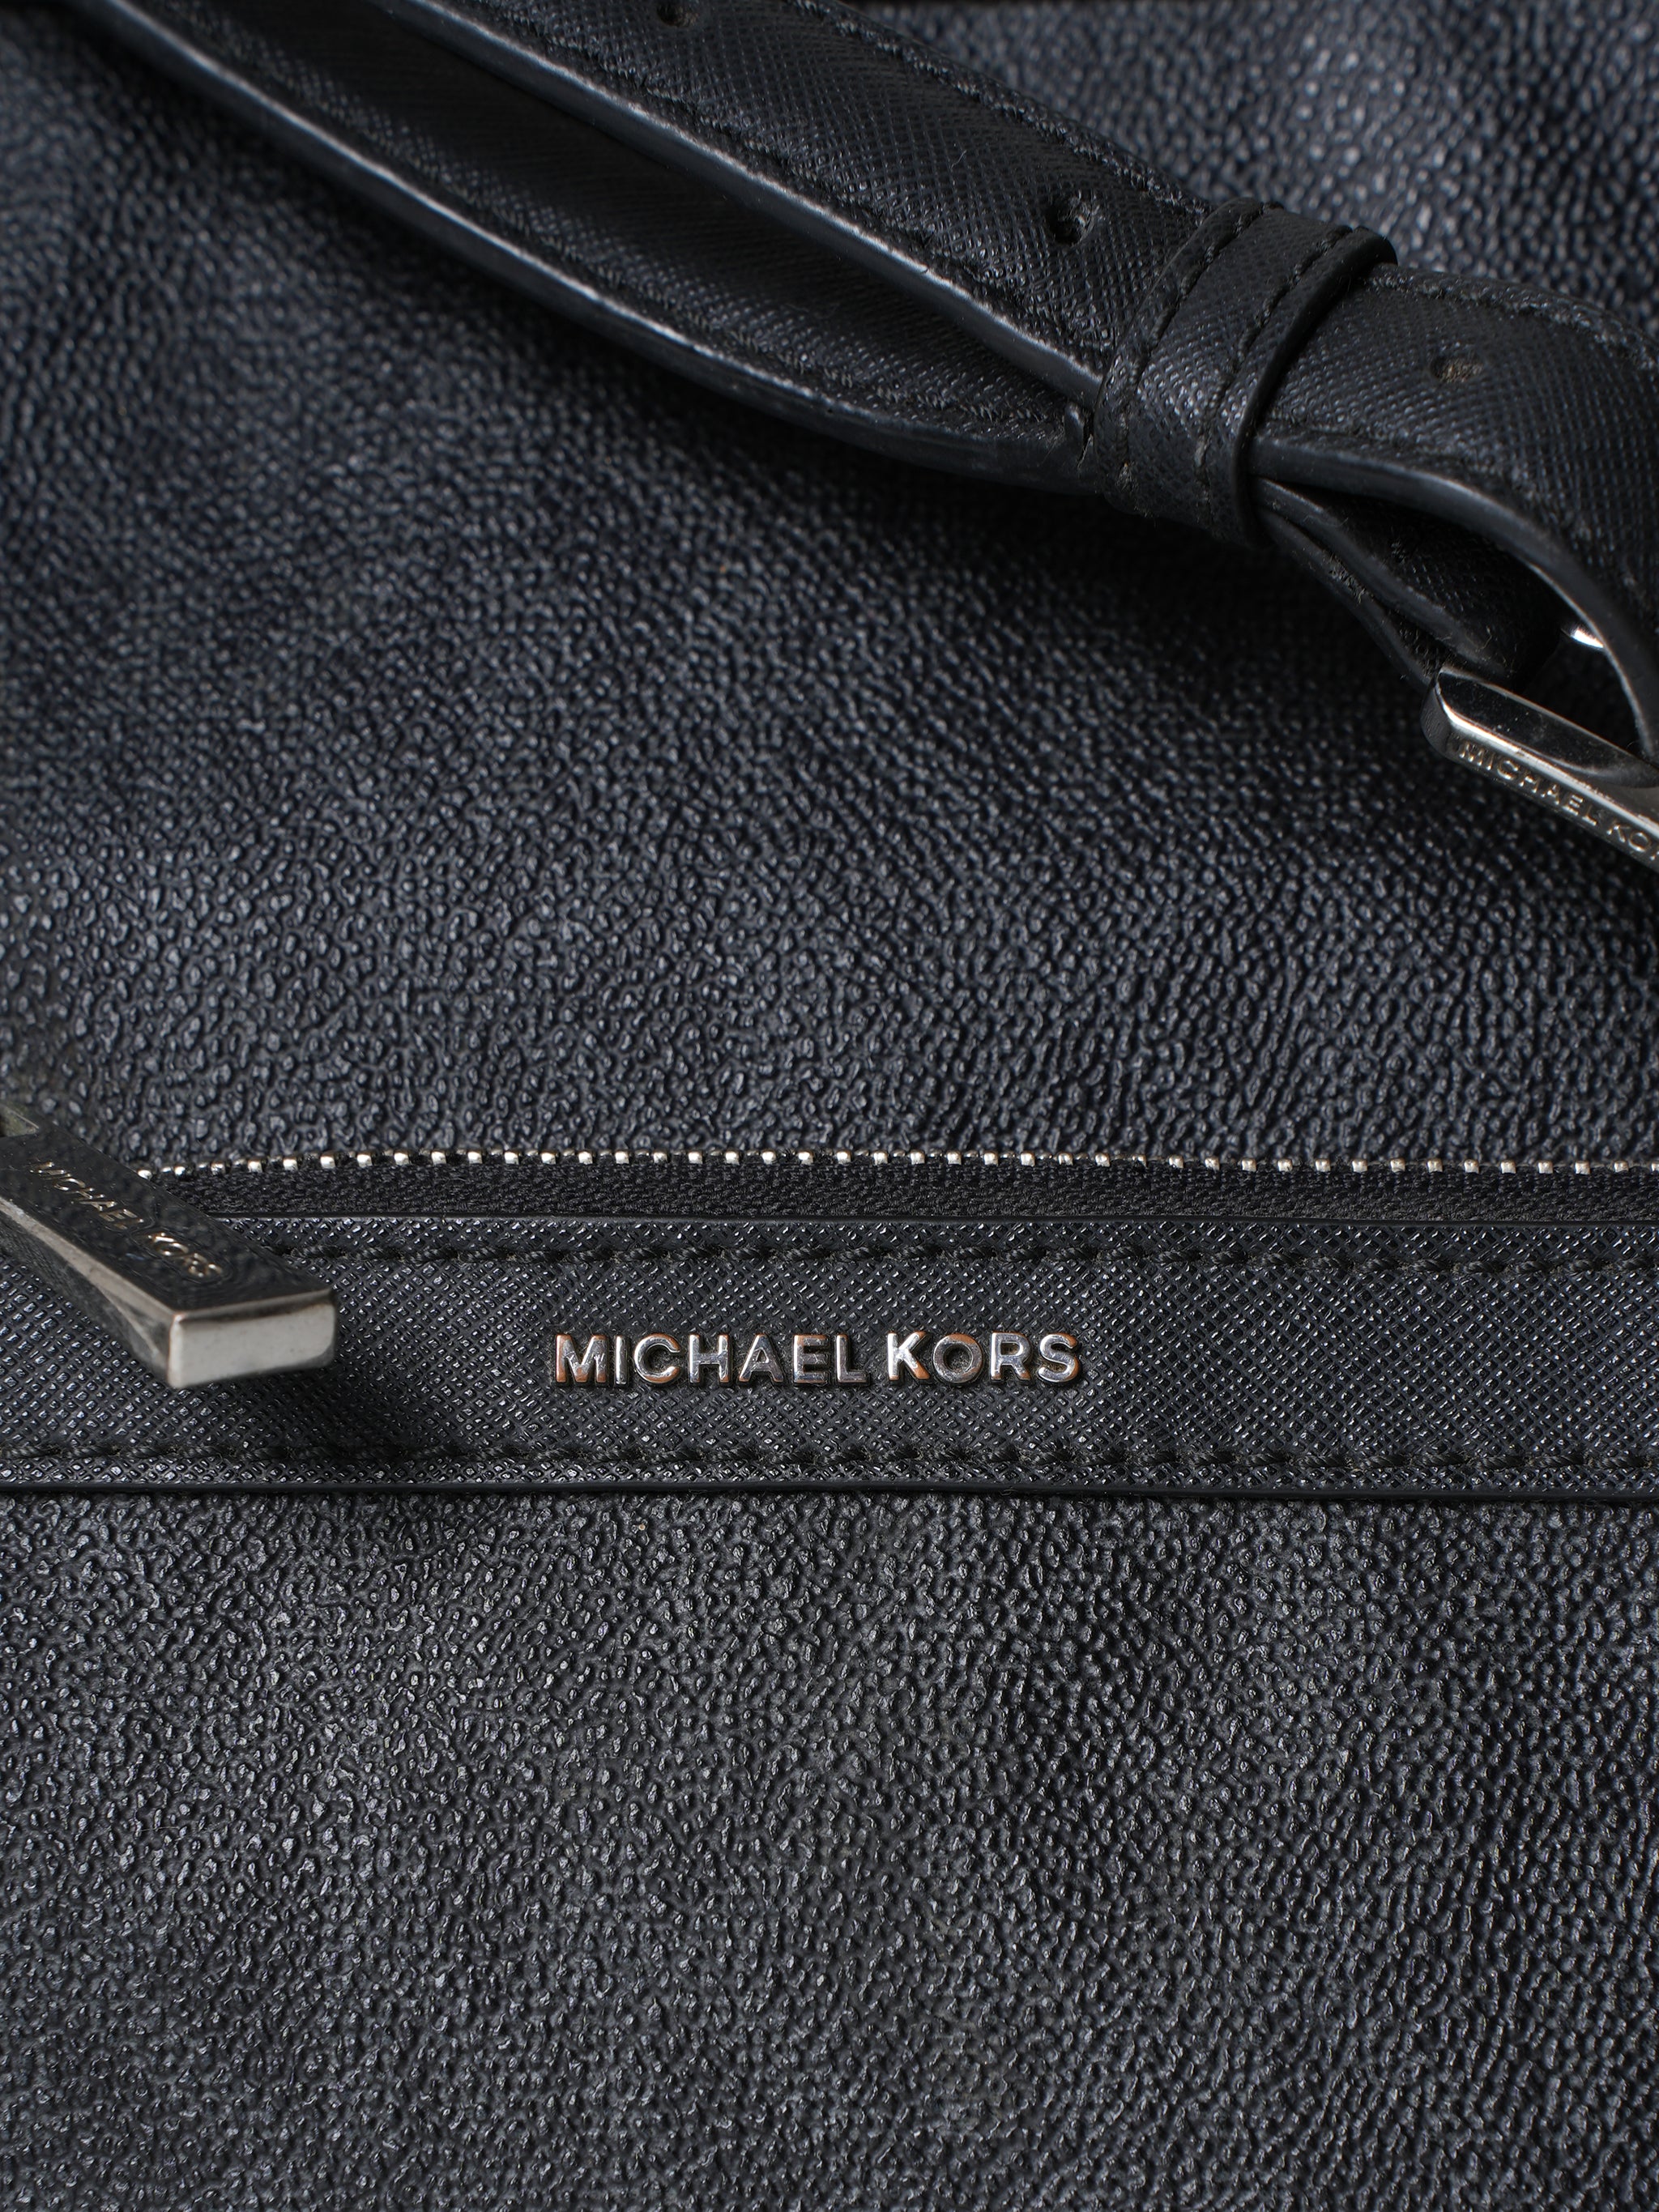 Michael Kors Black Crossbody Bag